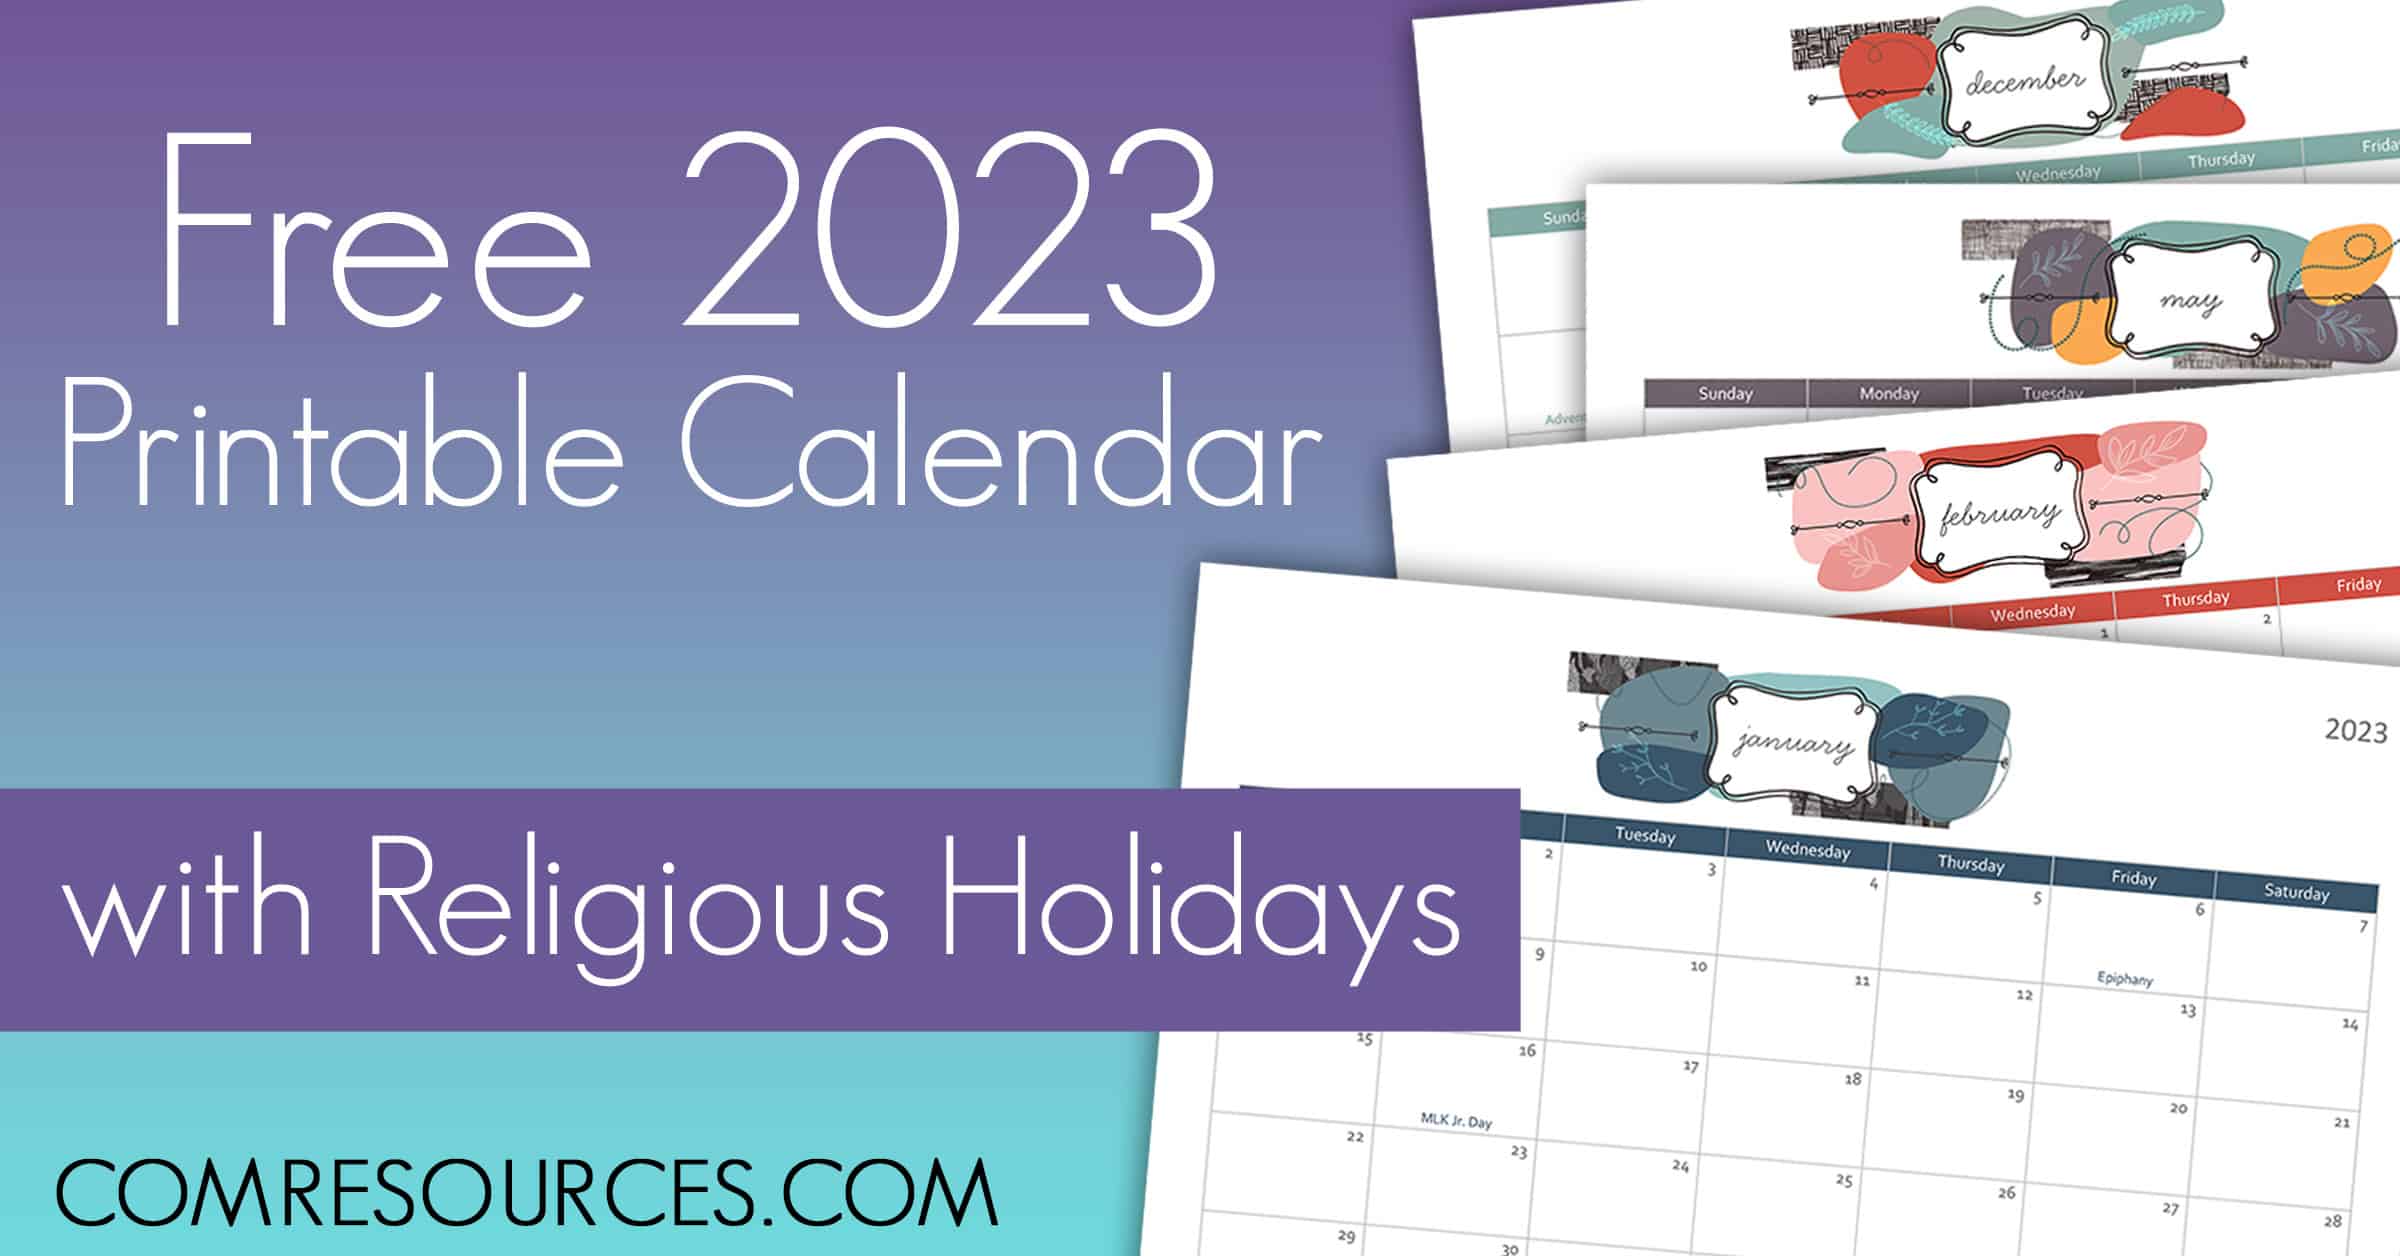 Printable 2023 Church Calendar | ChurchArt.com Blog